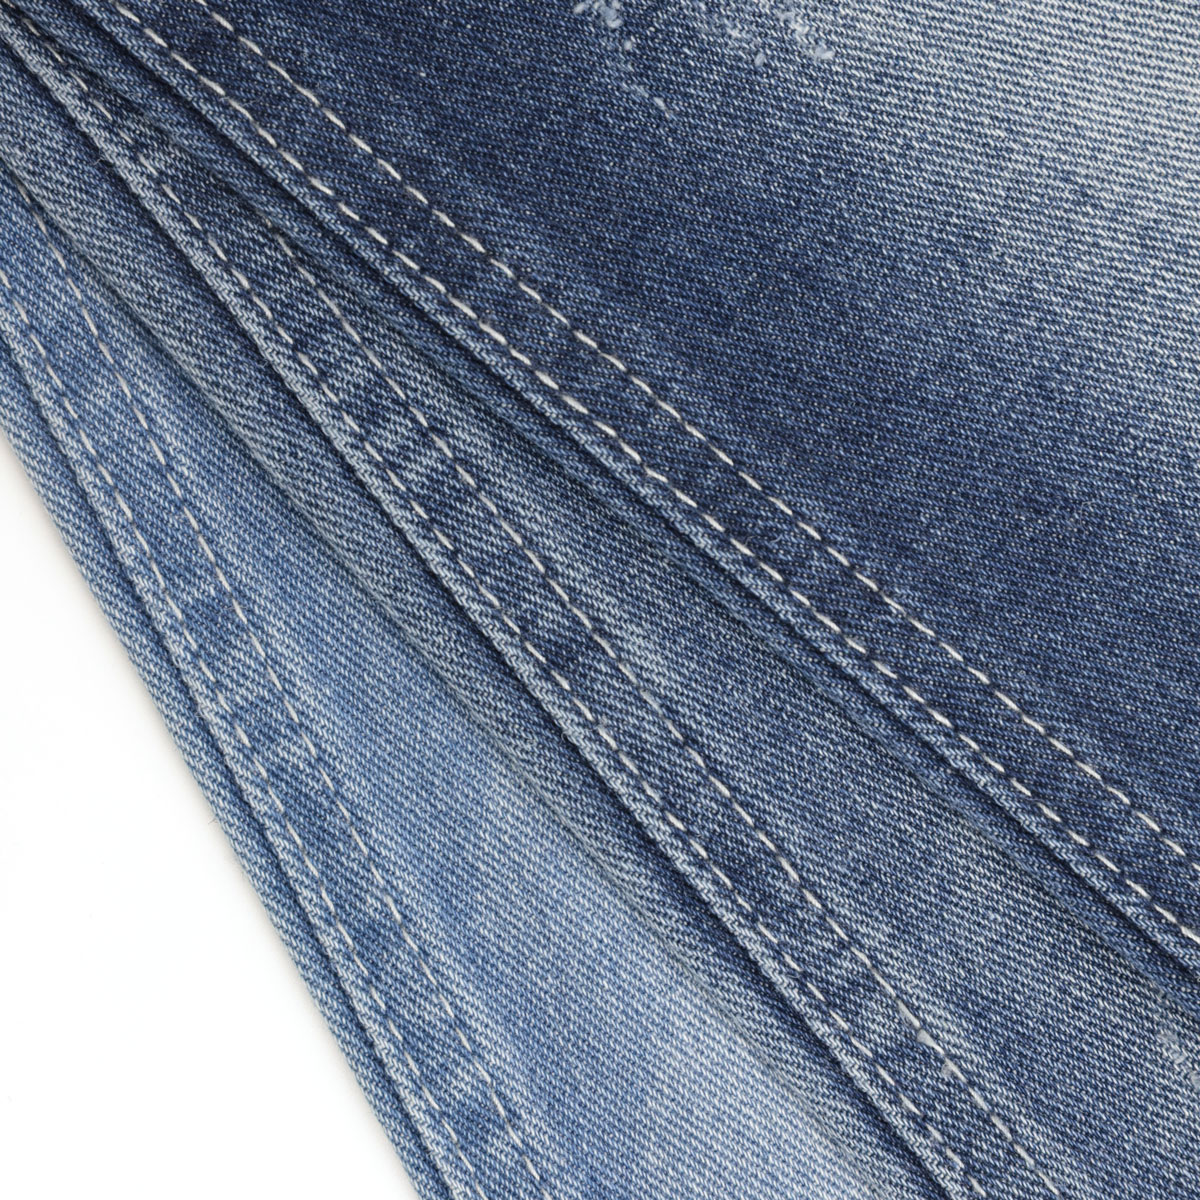 Top 5 High Stretch Denim Fabrics That Make Jeans so Comfortable 1